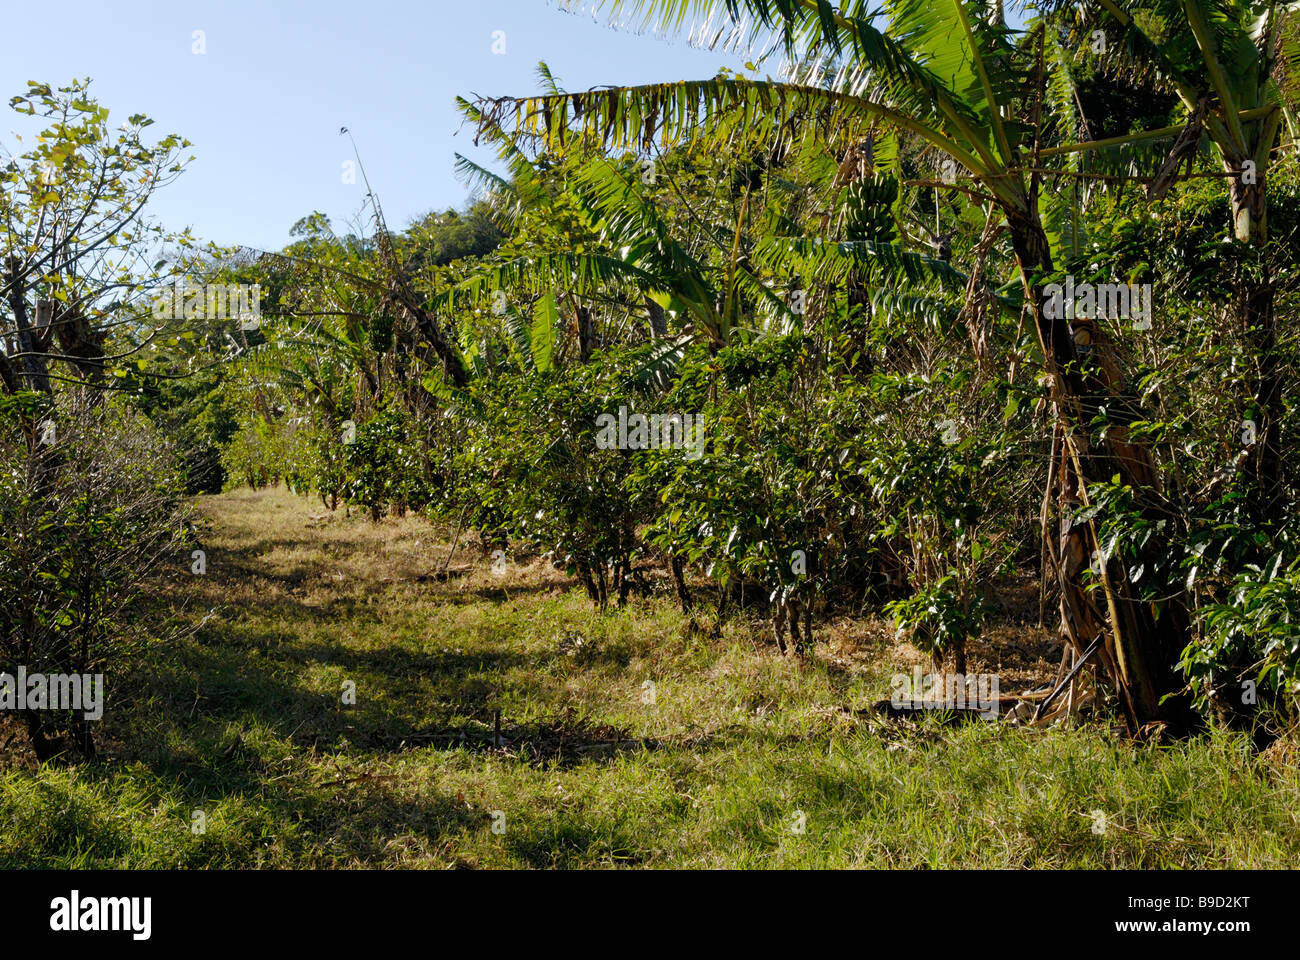 Shade grown organic coffee plantation, Hacienda La Amistad, near San Vito, Costa Rica Stock Photo